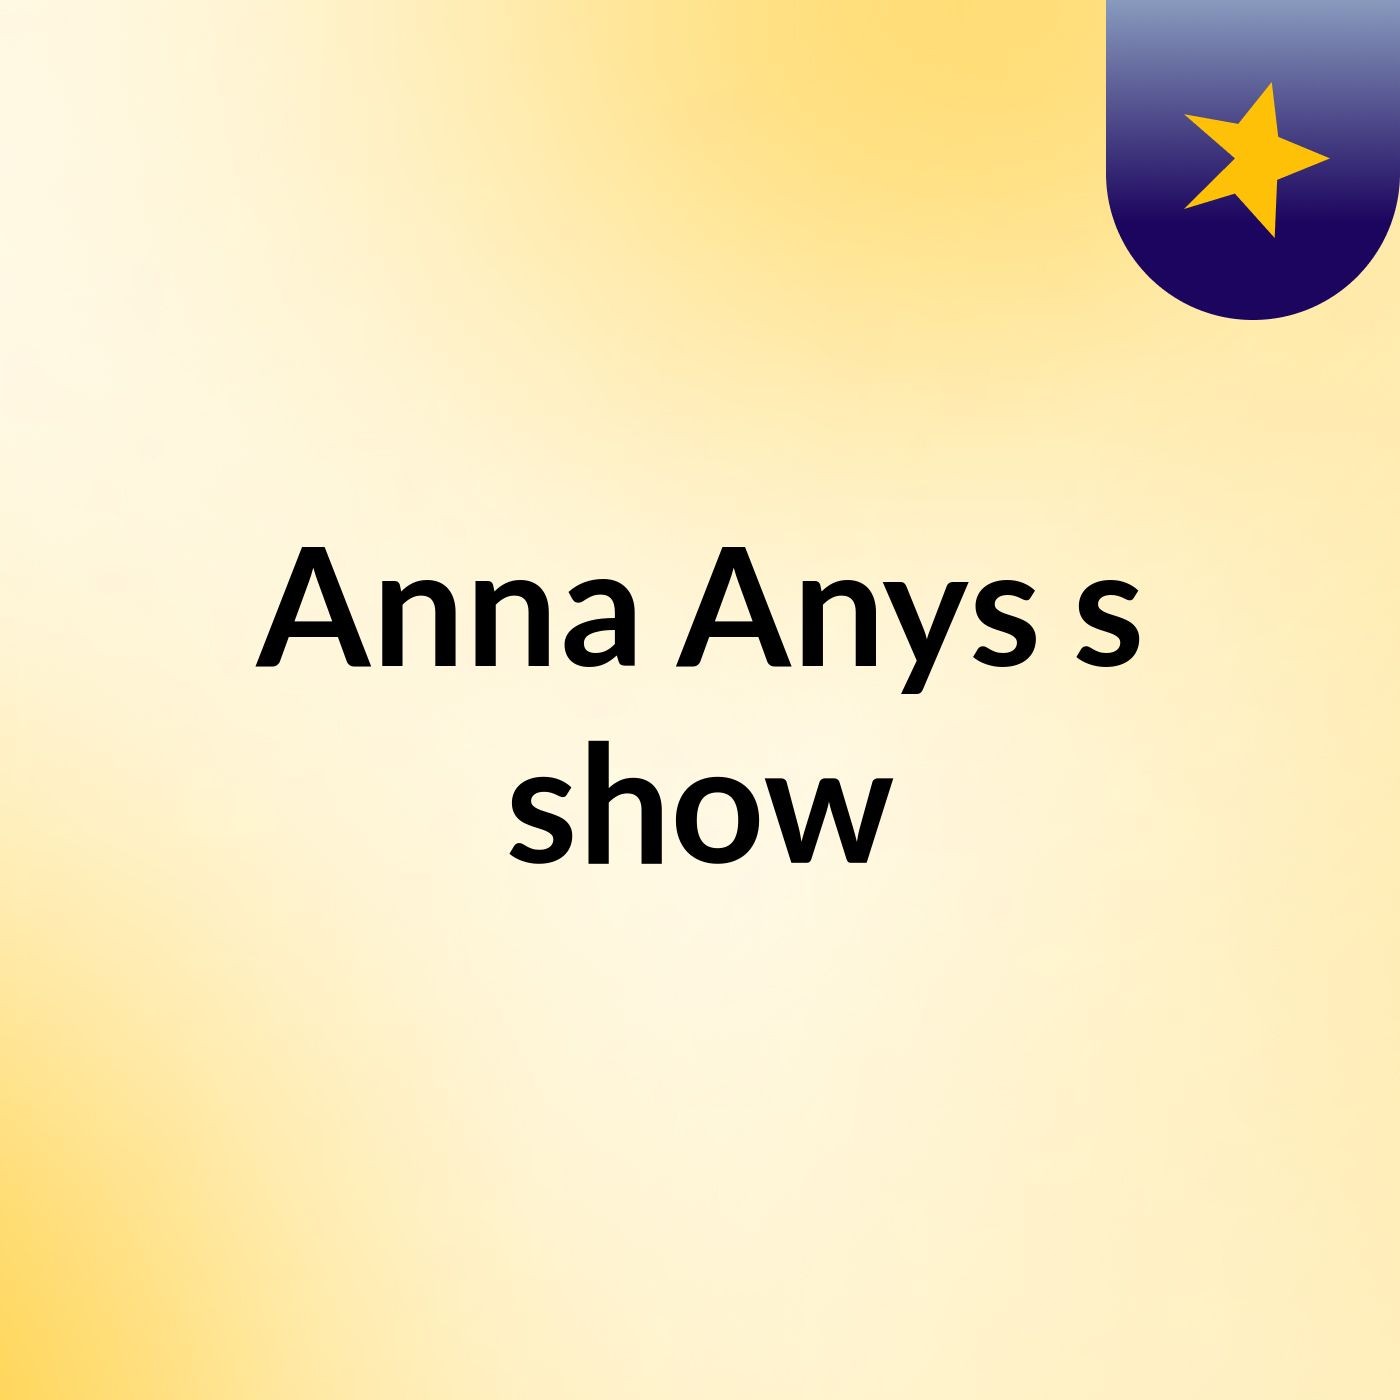 Anna Anys's show